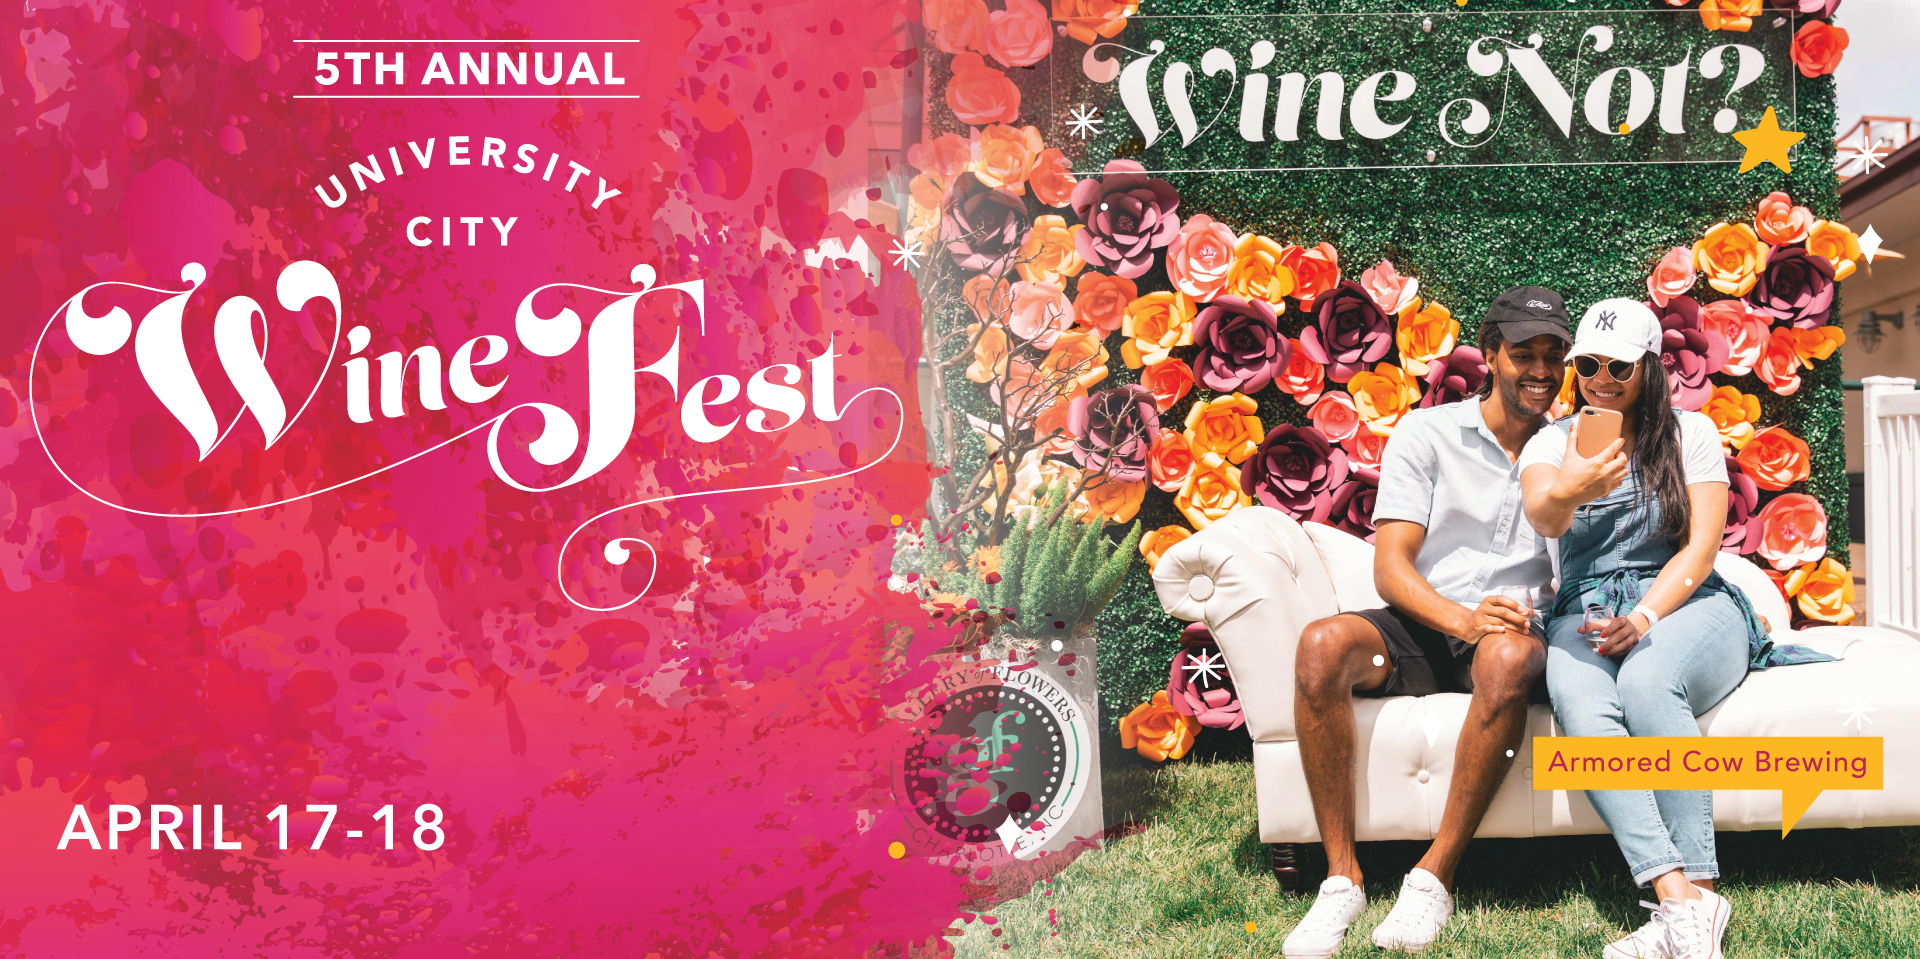 5th Annual Univ City Wine Fest - Sunday promotional image